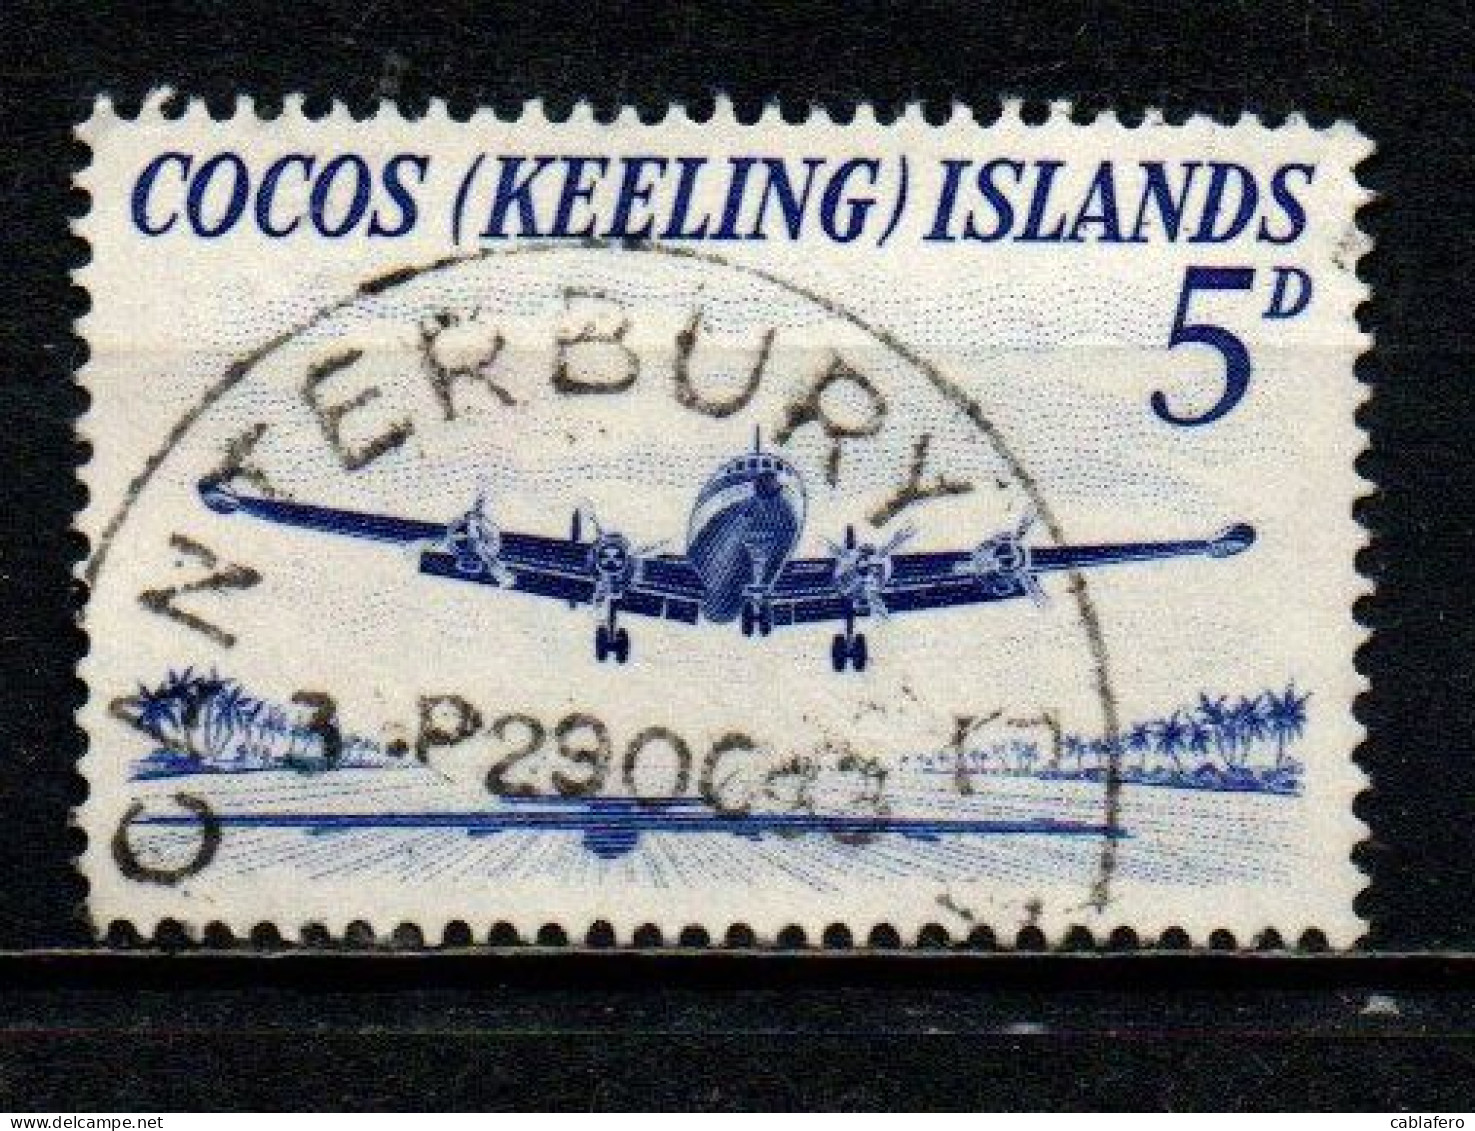 COCOS ISLANDS - 1963 - Super Constellation - USATO - Kokosinseln (Keeling Islands)